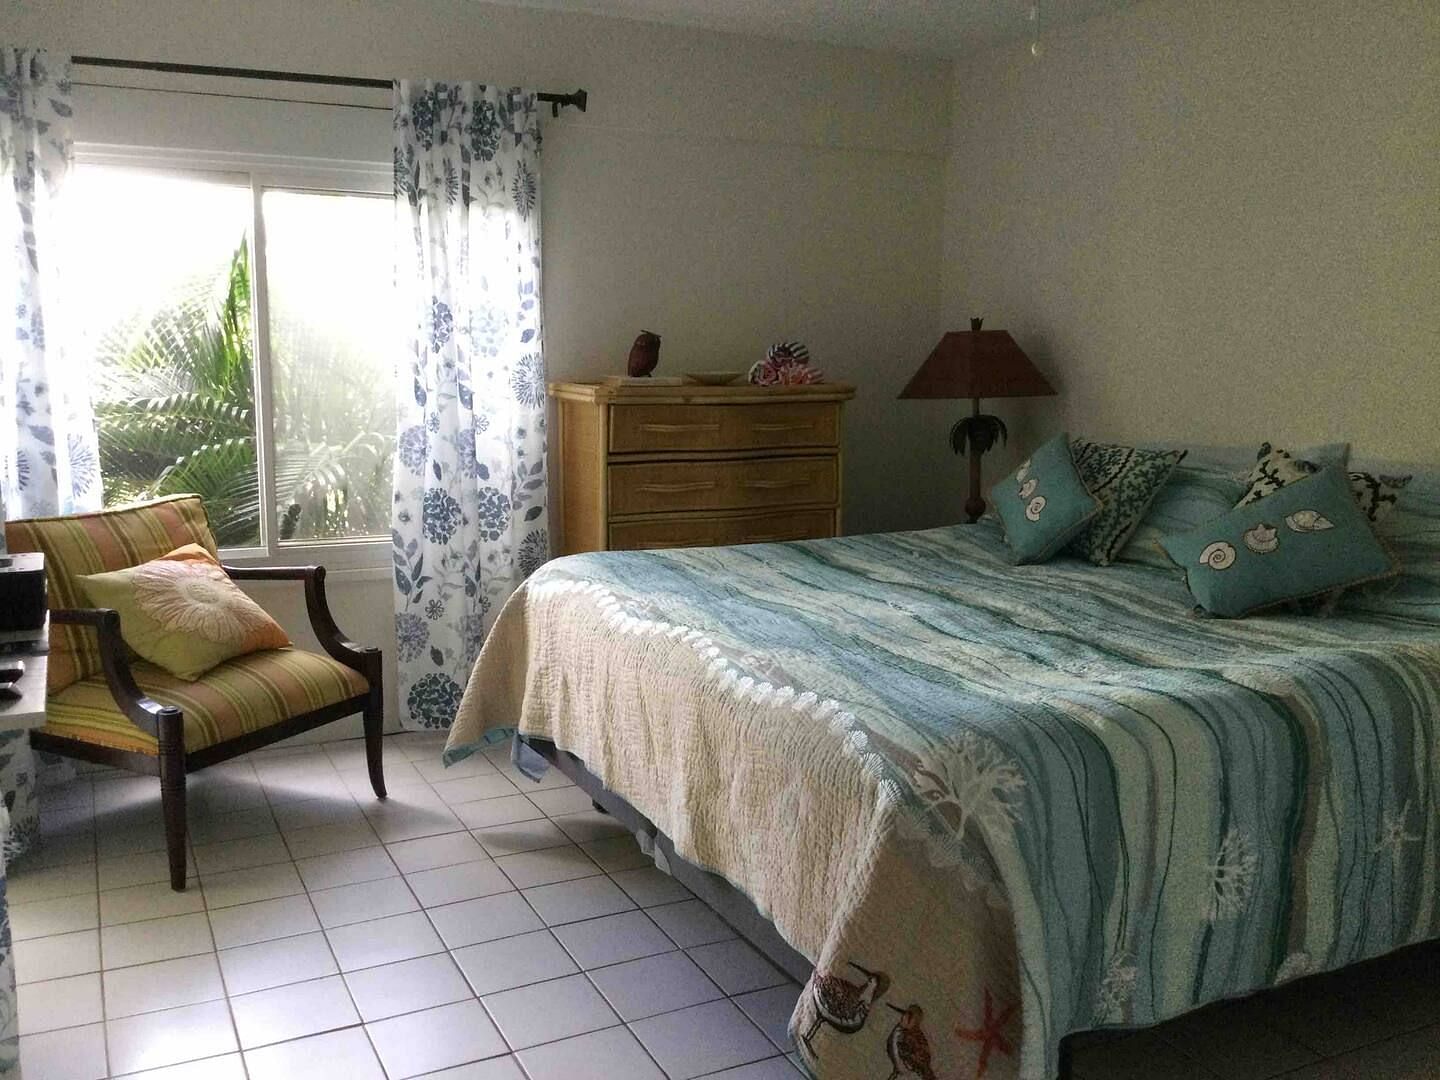 JWguest Apartment at St Thomas, St. Thomas | Rainbow1 - 2-bedroom Condo | Jwbnb no brobnb 3